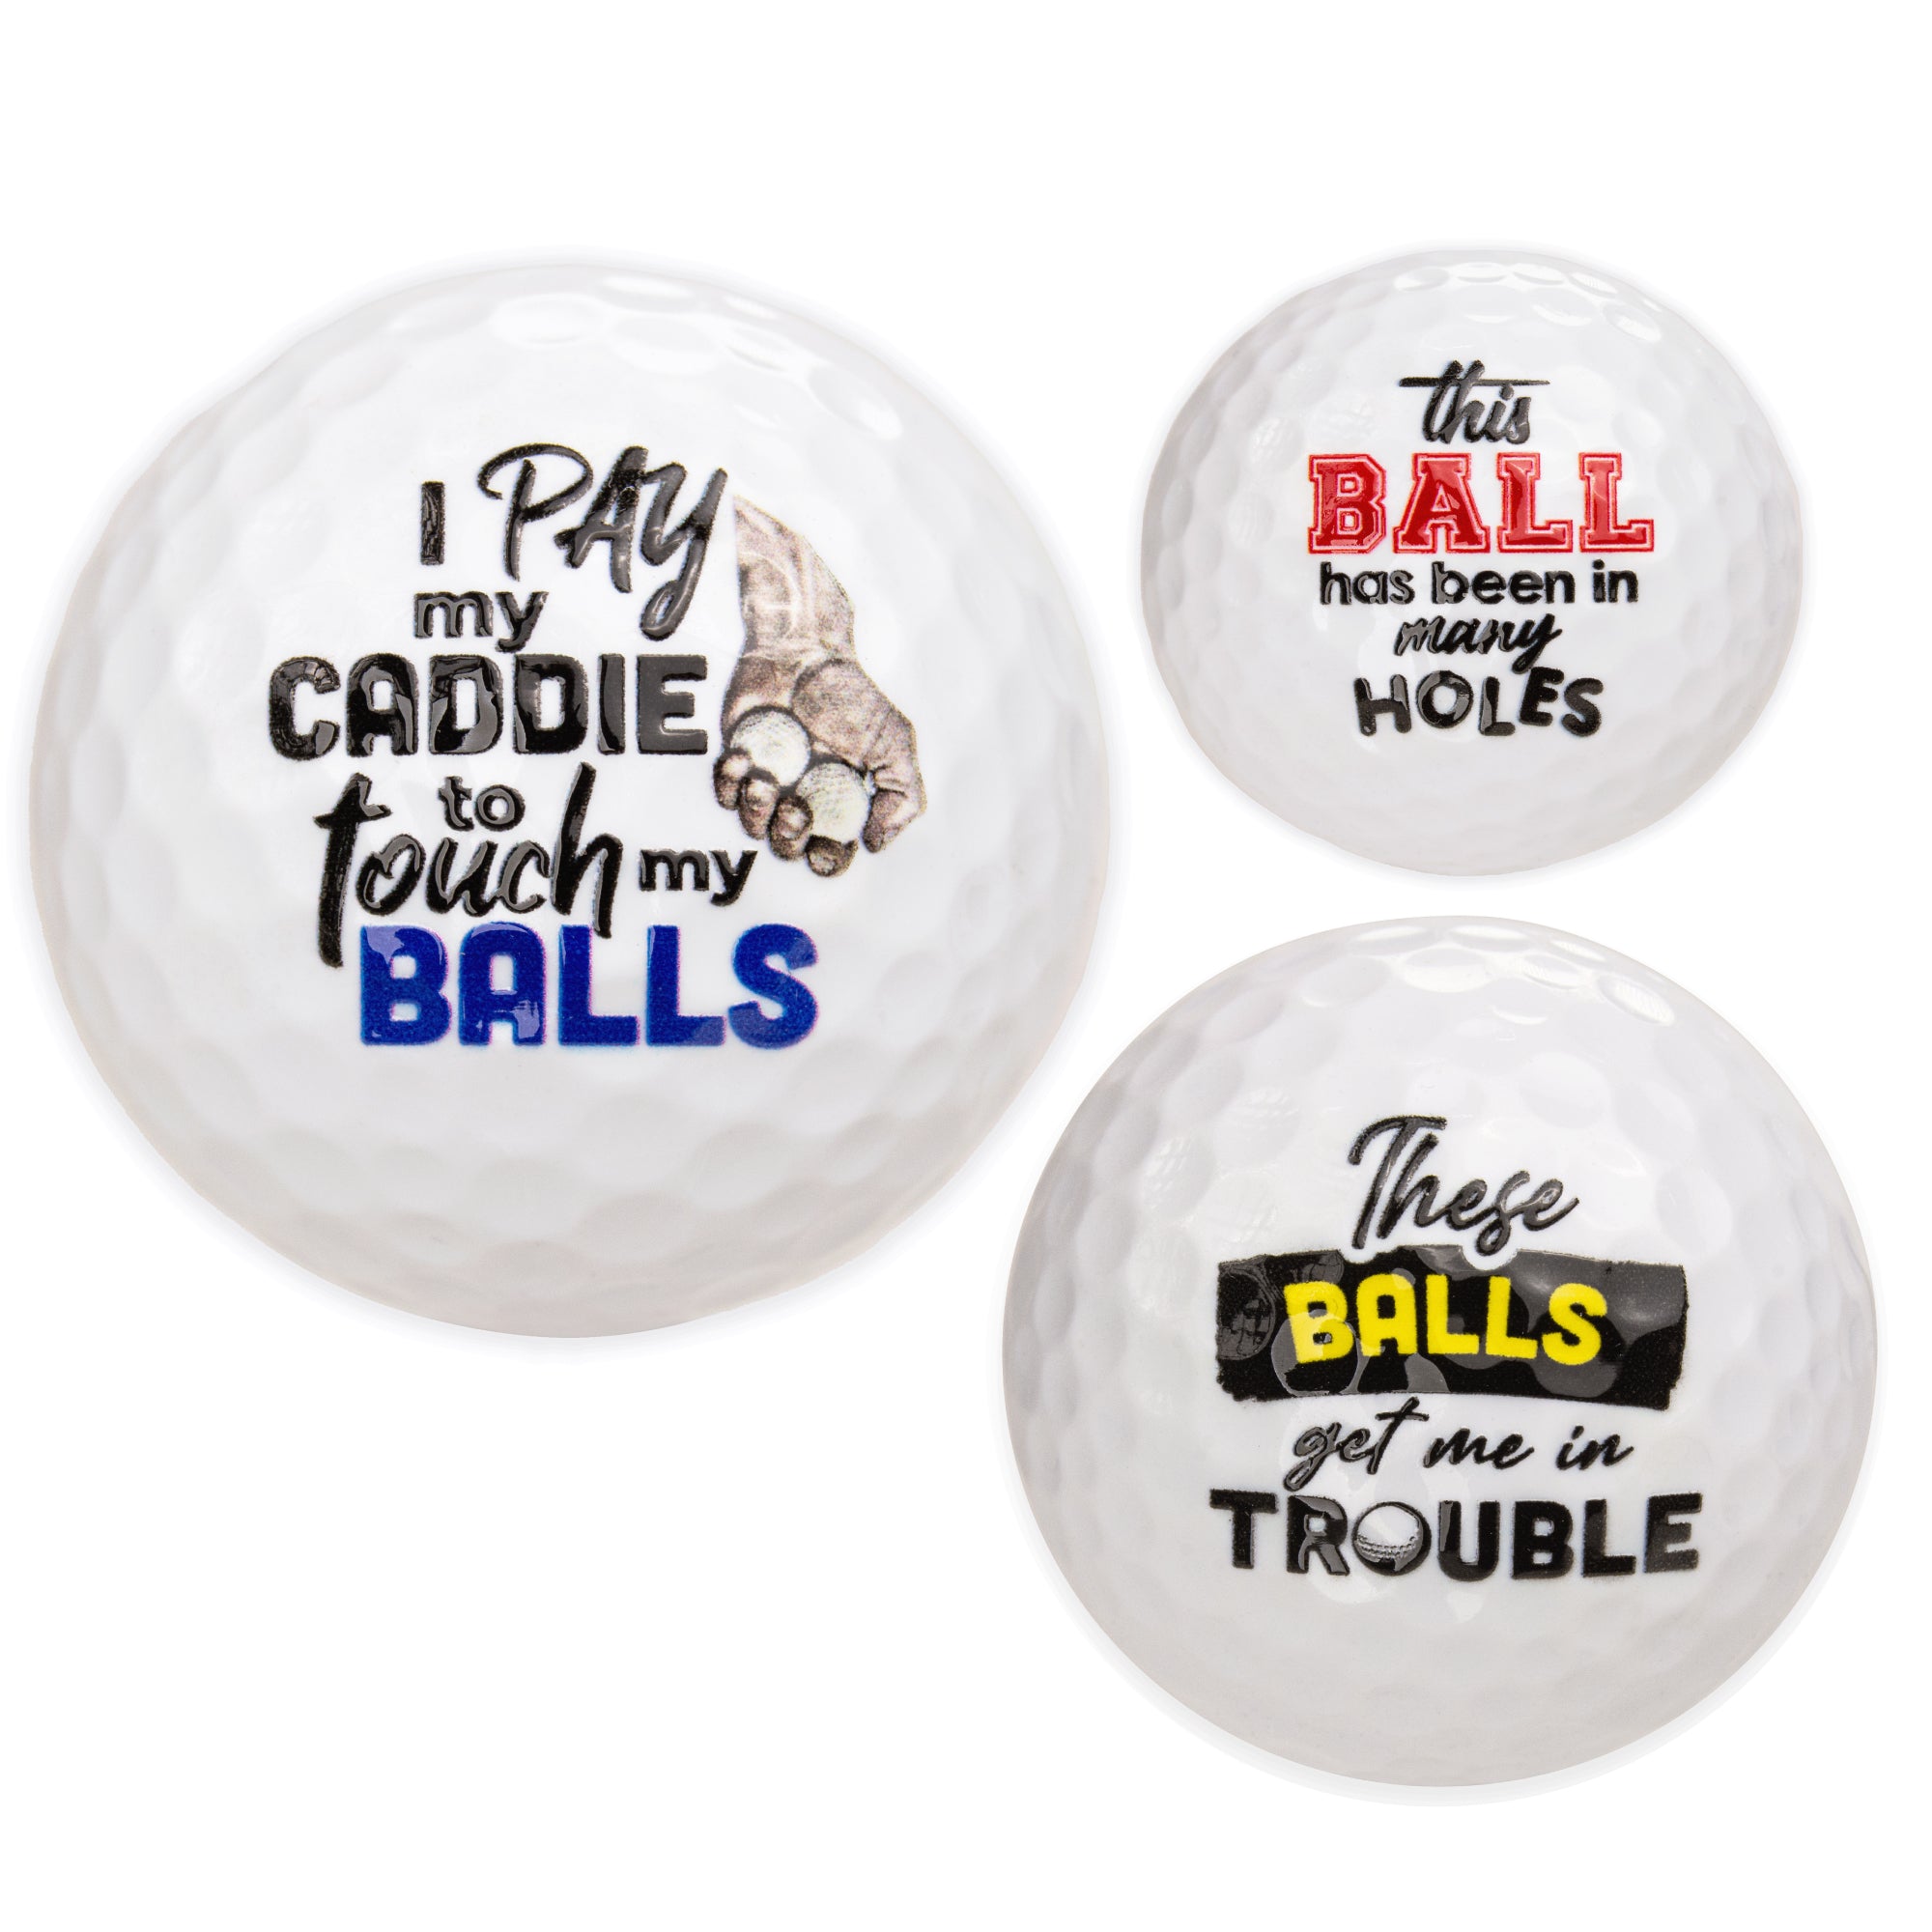 Naughty Balls, Novelty Golf Balls, Funny Golf Balls, Bachelor Party Gifts